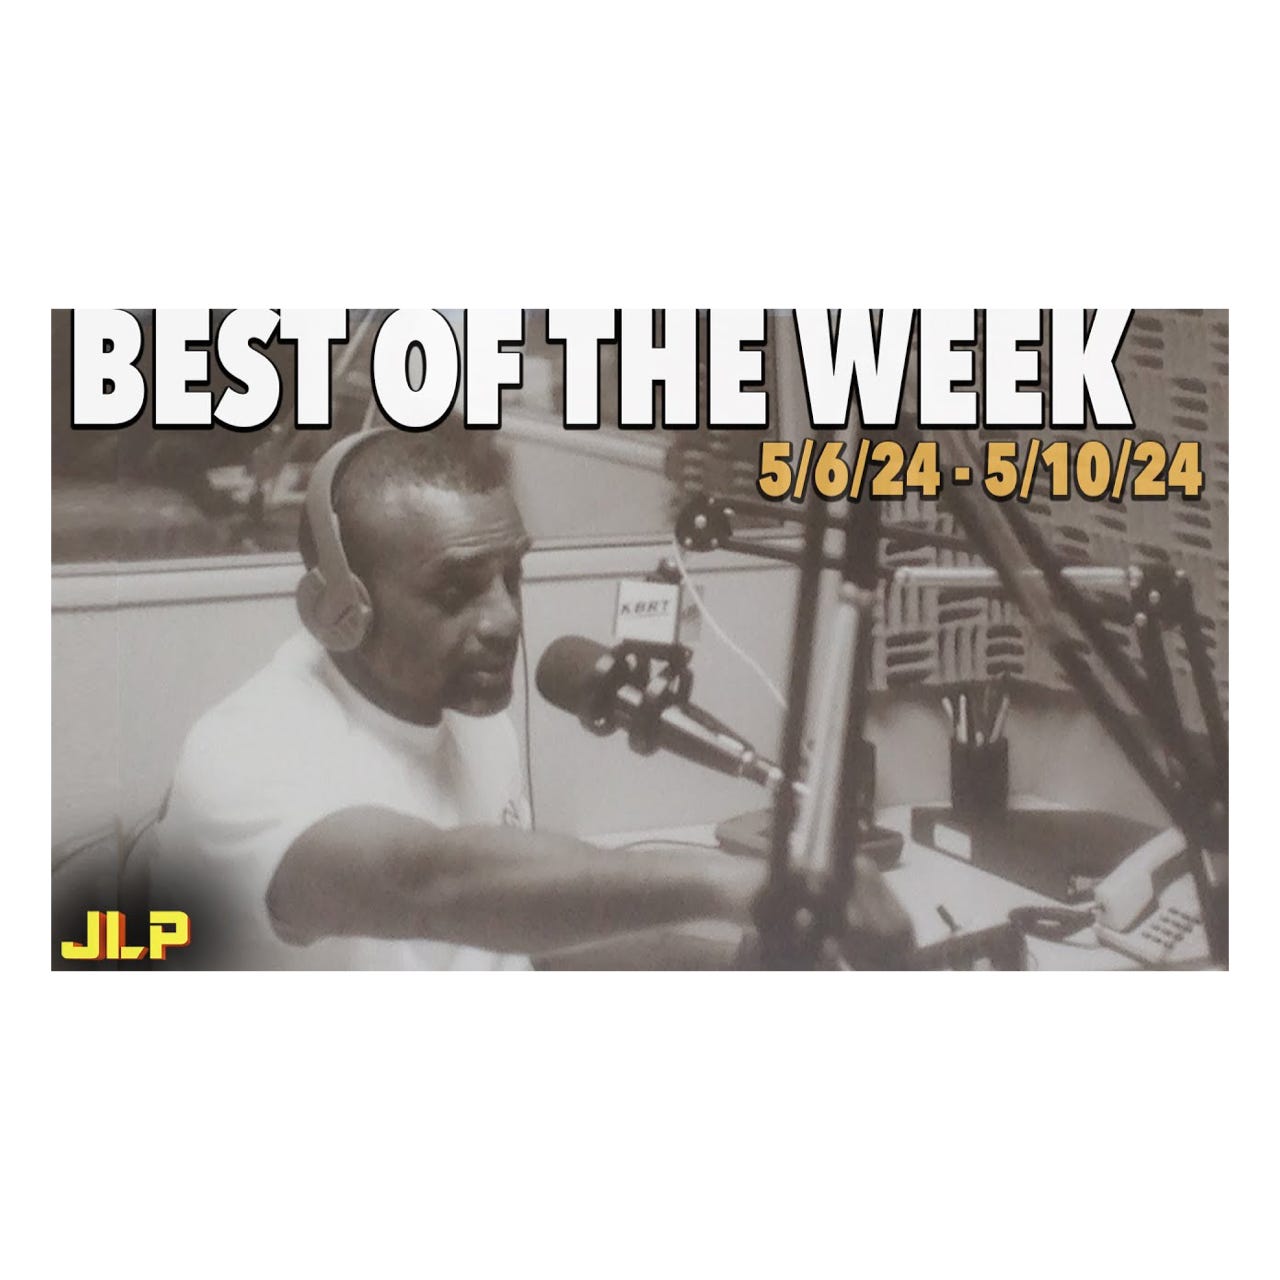 BEST OF THE WEEK: CTU, Boy Scouts, Tipping, Cain/Abel, Joel Friday TV (5/6/24-5/10/24) | JLP